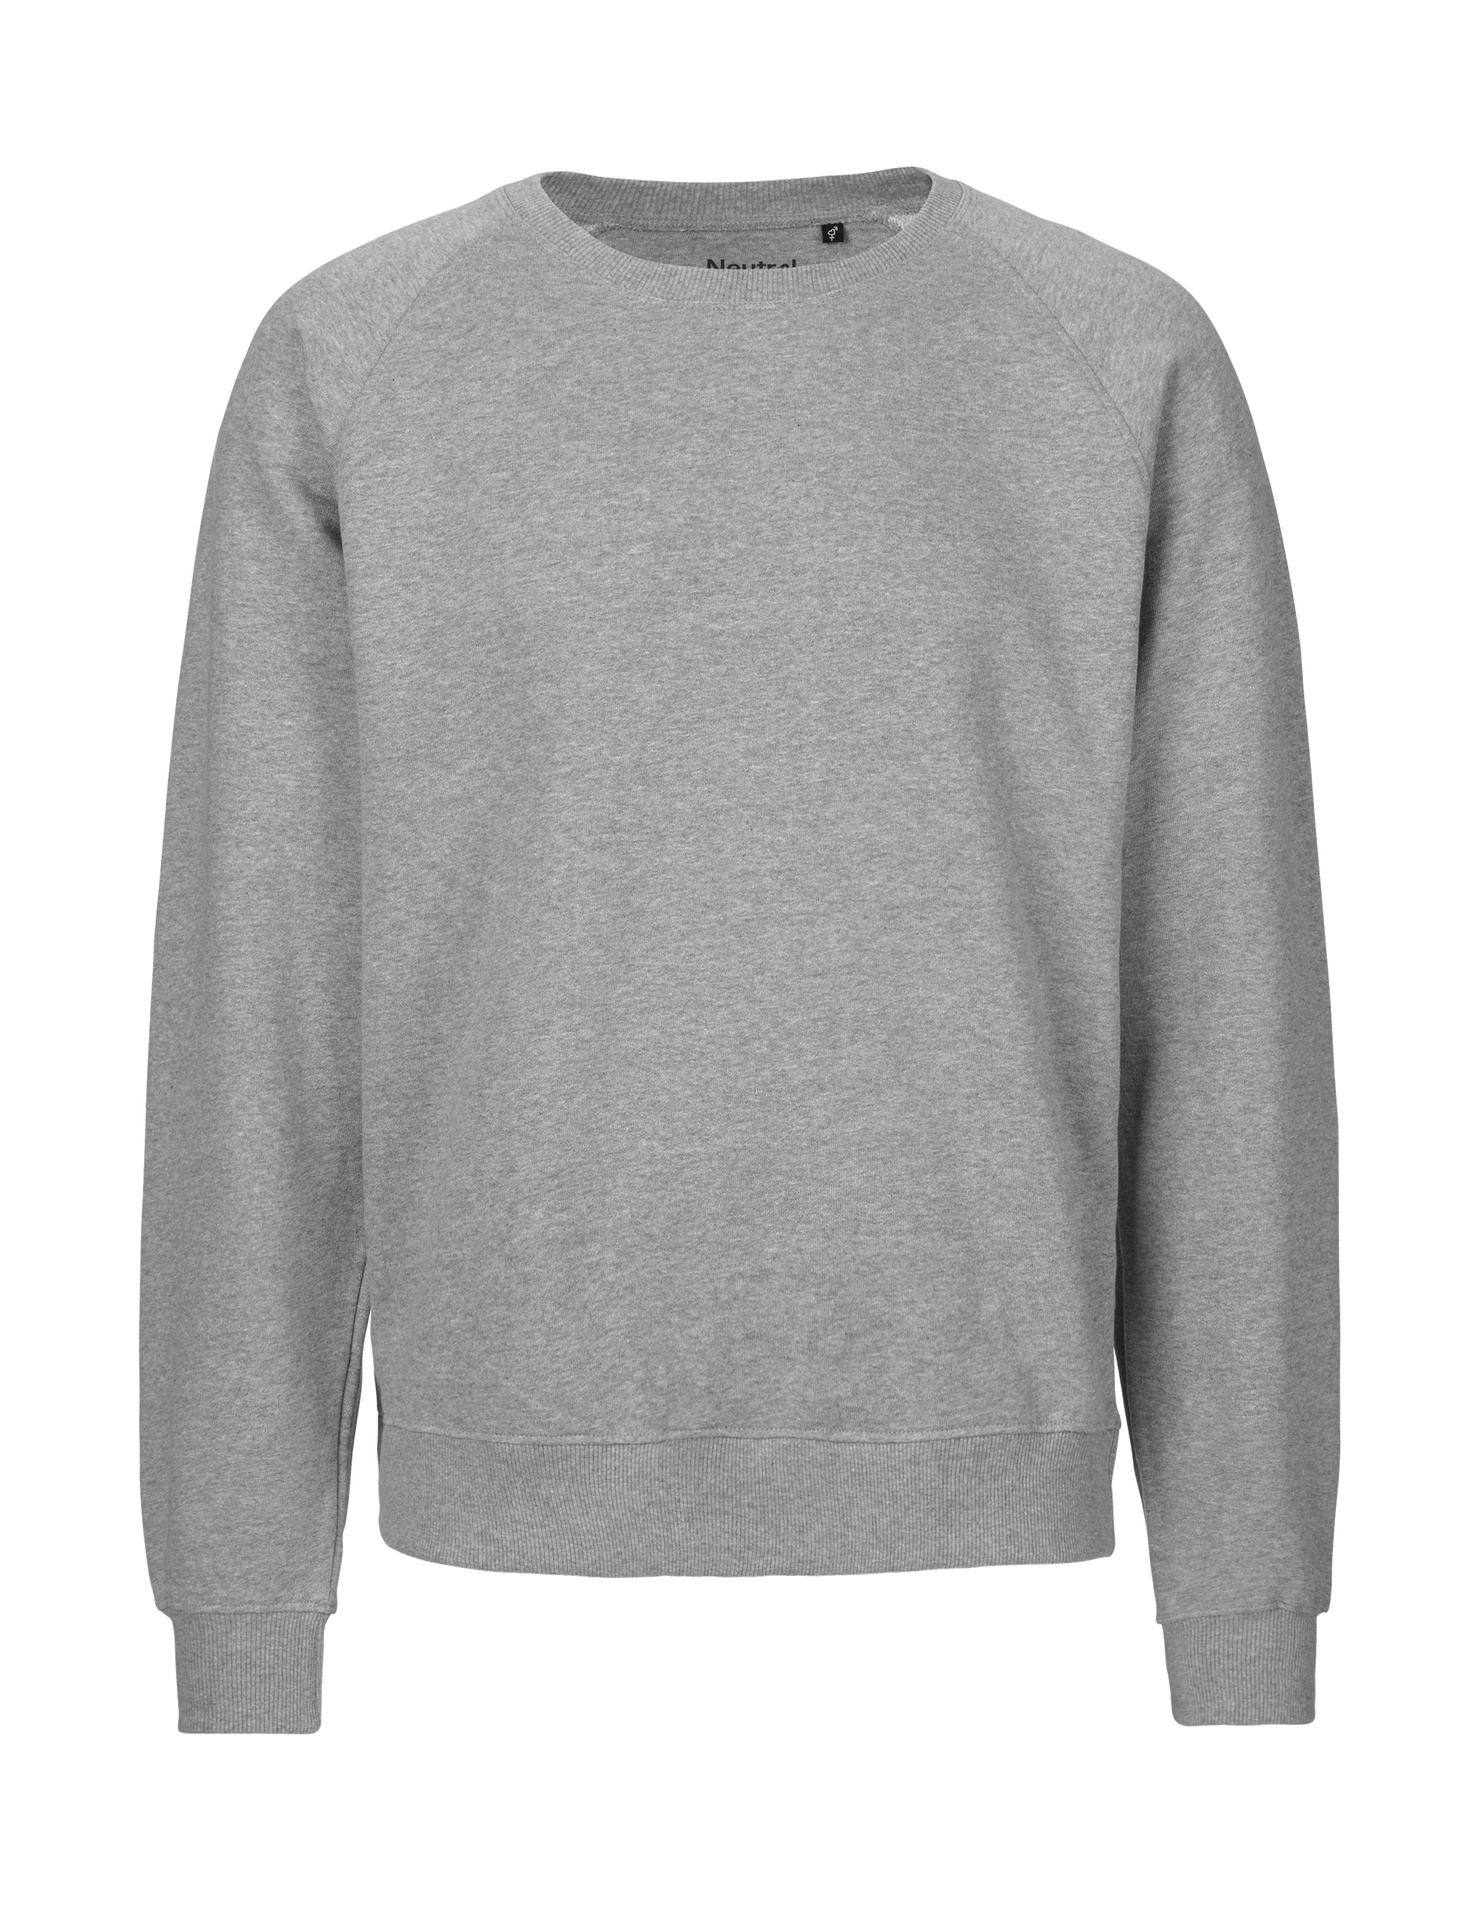 [PR/02746] Unisex Sweatshirt (Sport Grey 21, XL)